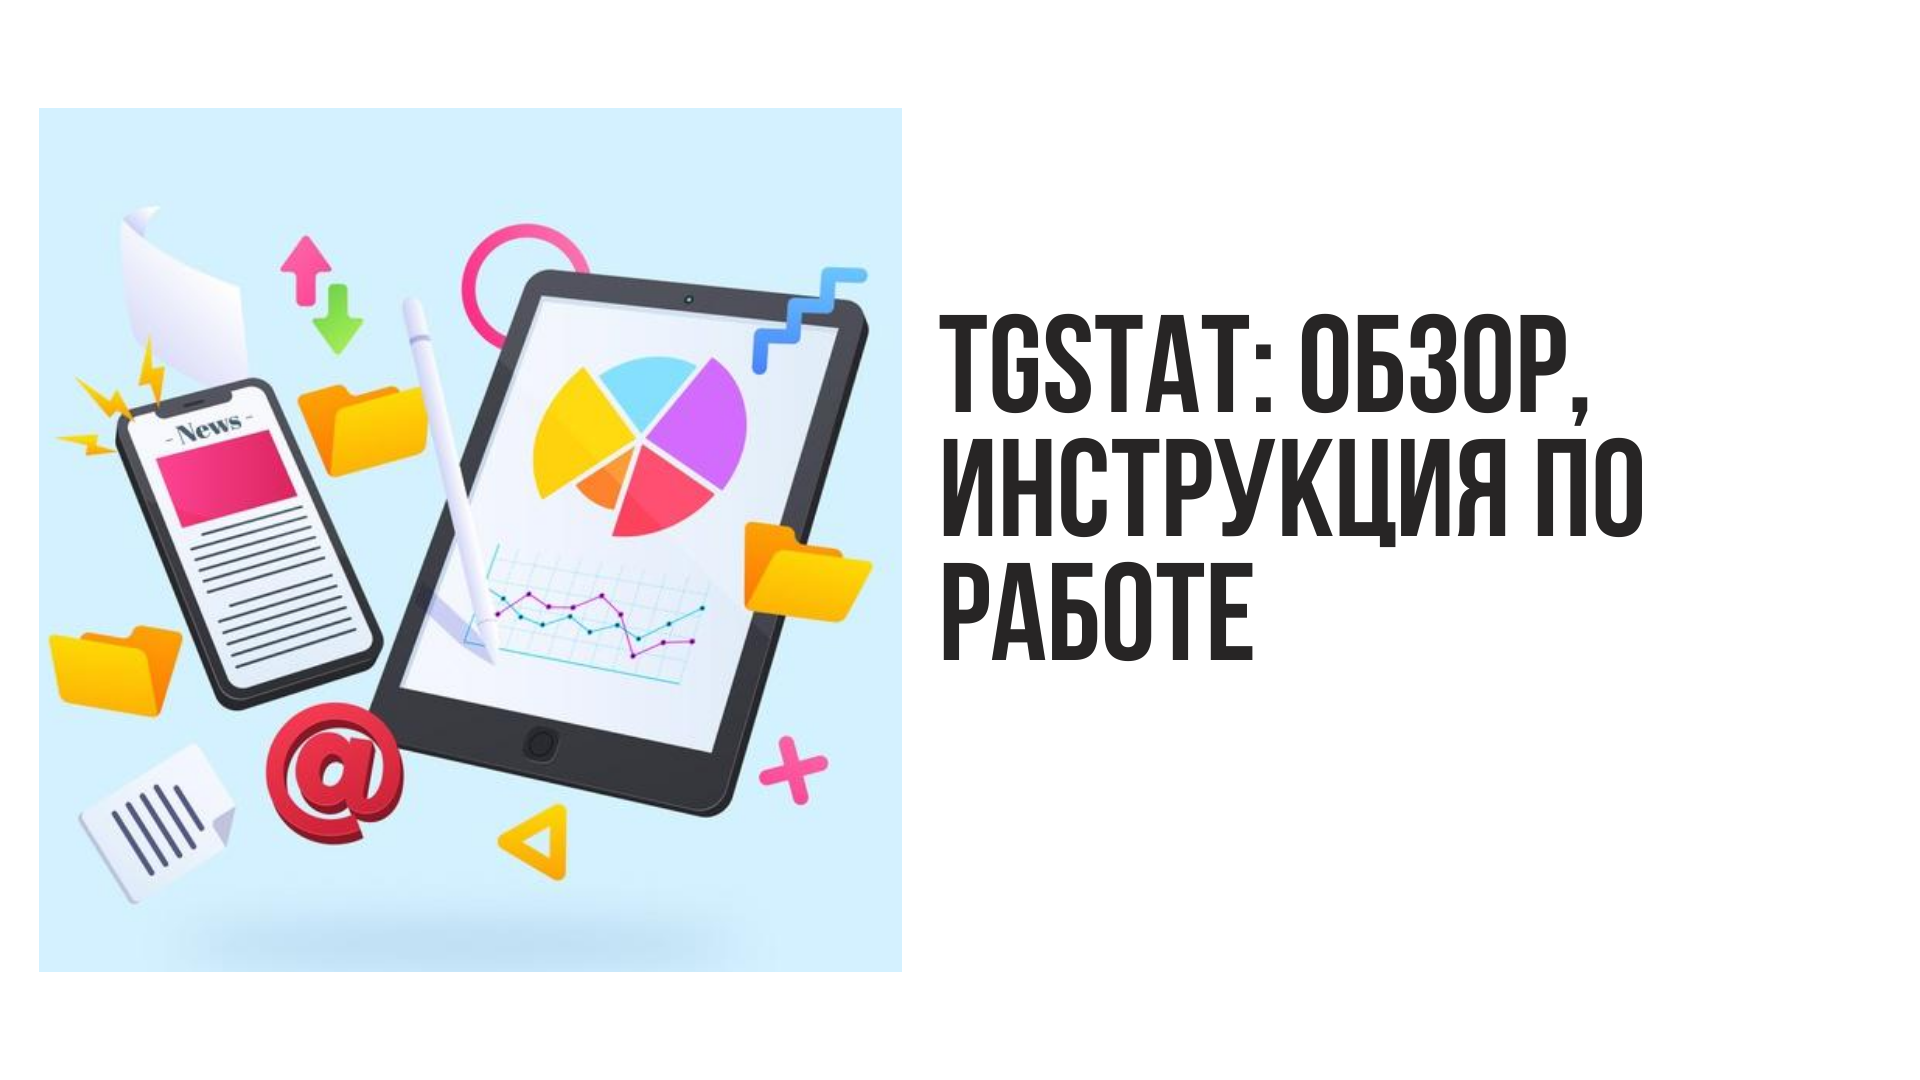 Tgstat (Тгстат): обзор, полная инструкция по работе с сервисом